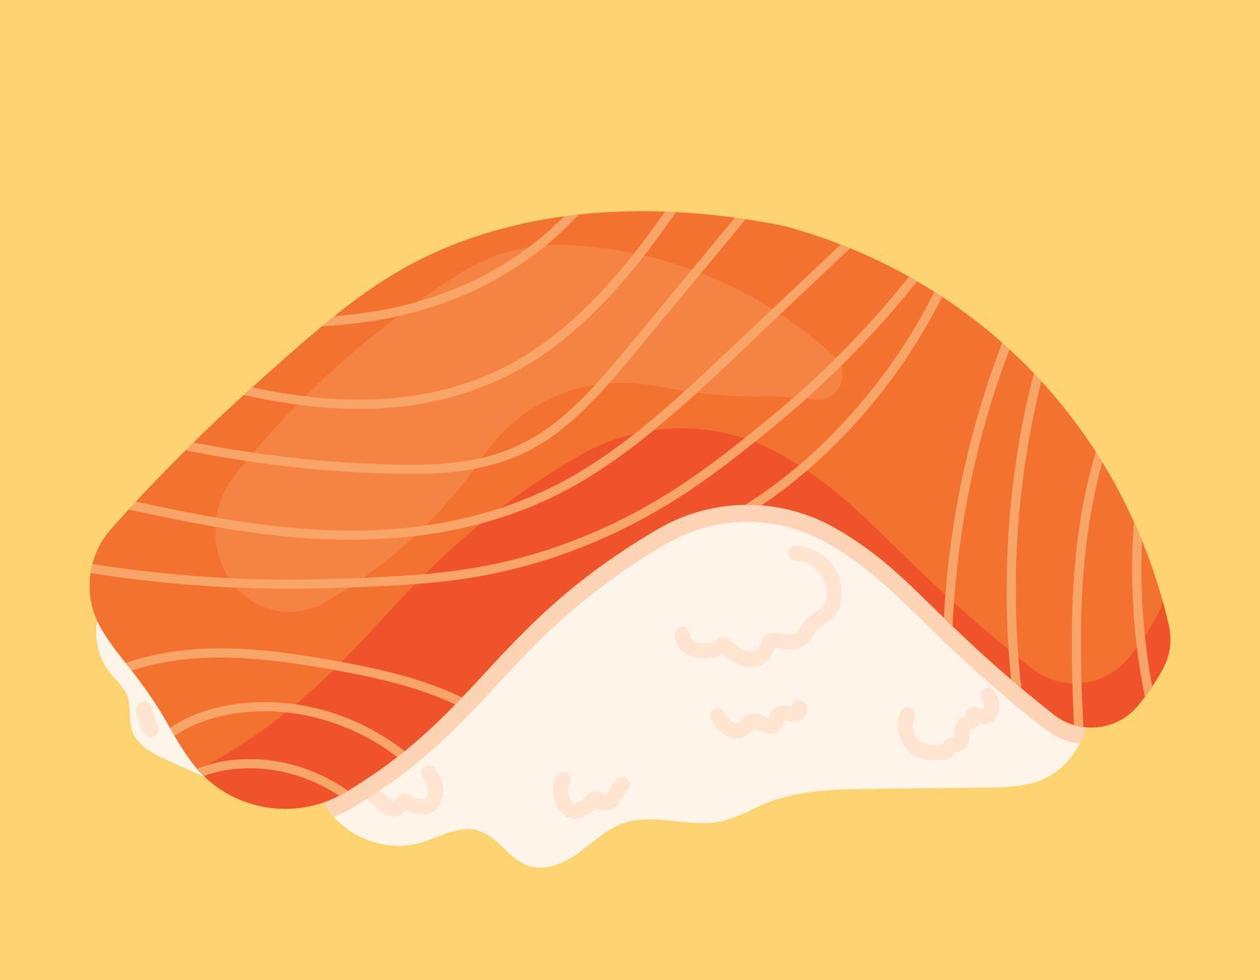 Zalm sushi voor single sashimi Japans voedsel vector illustratie